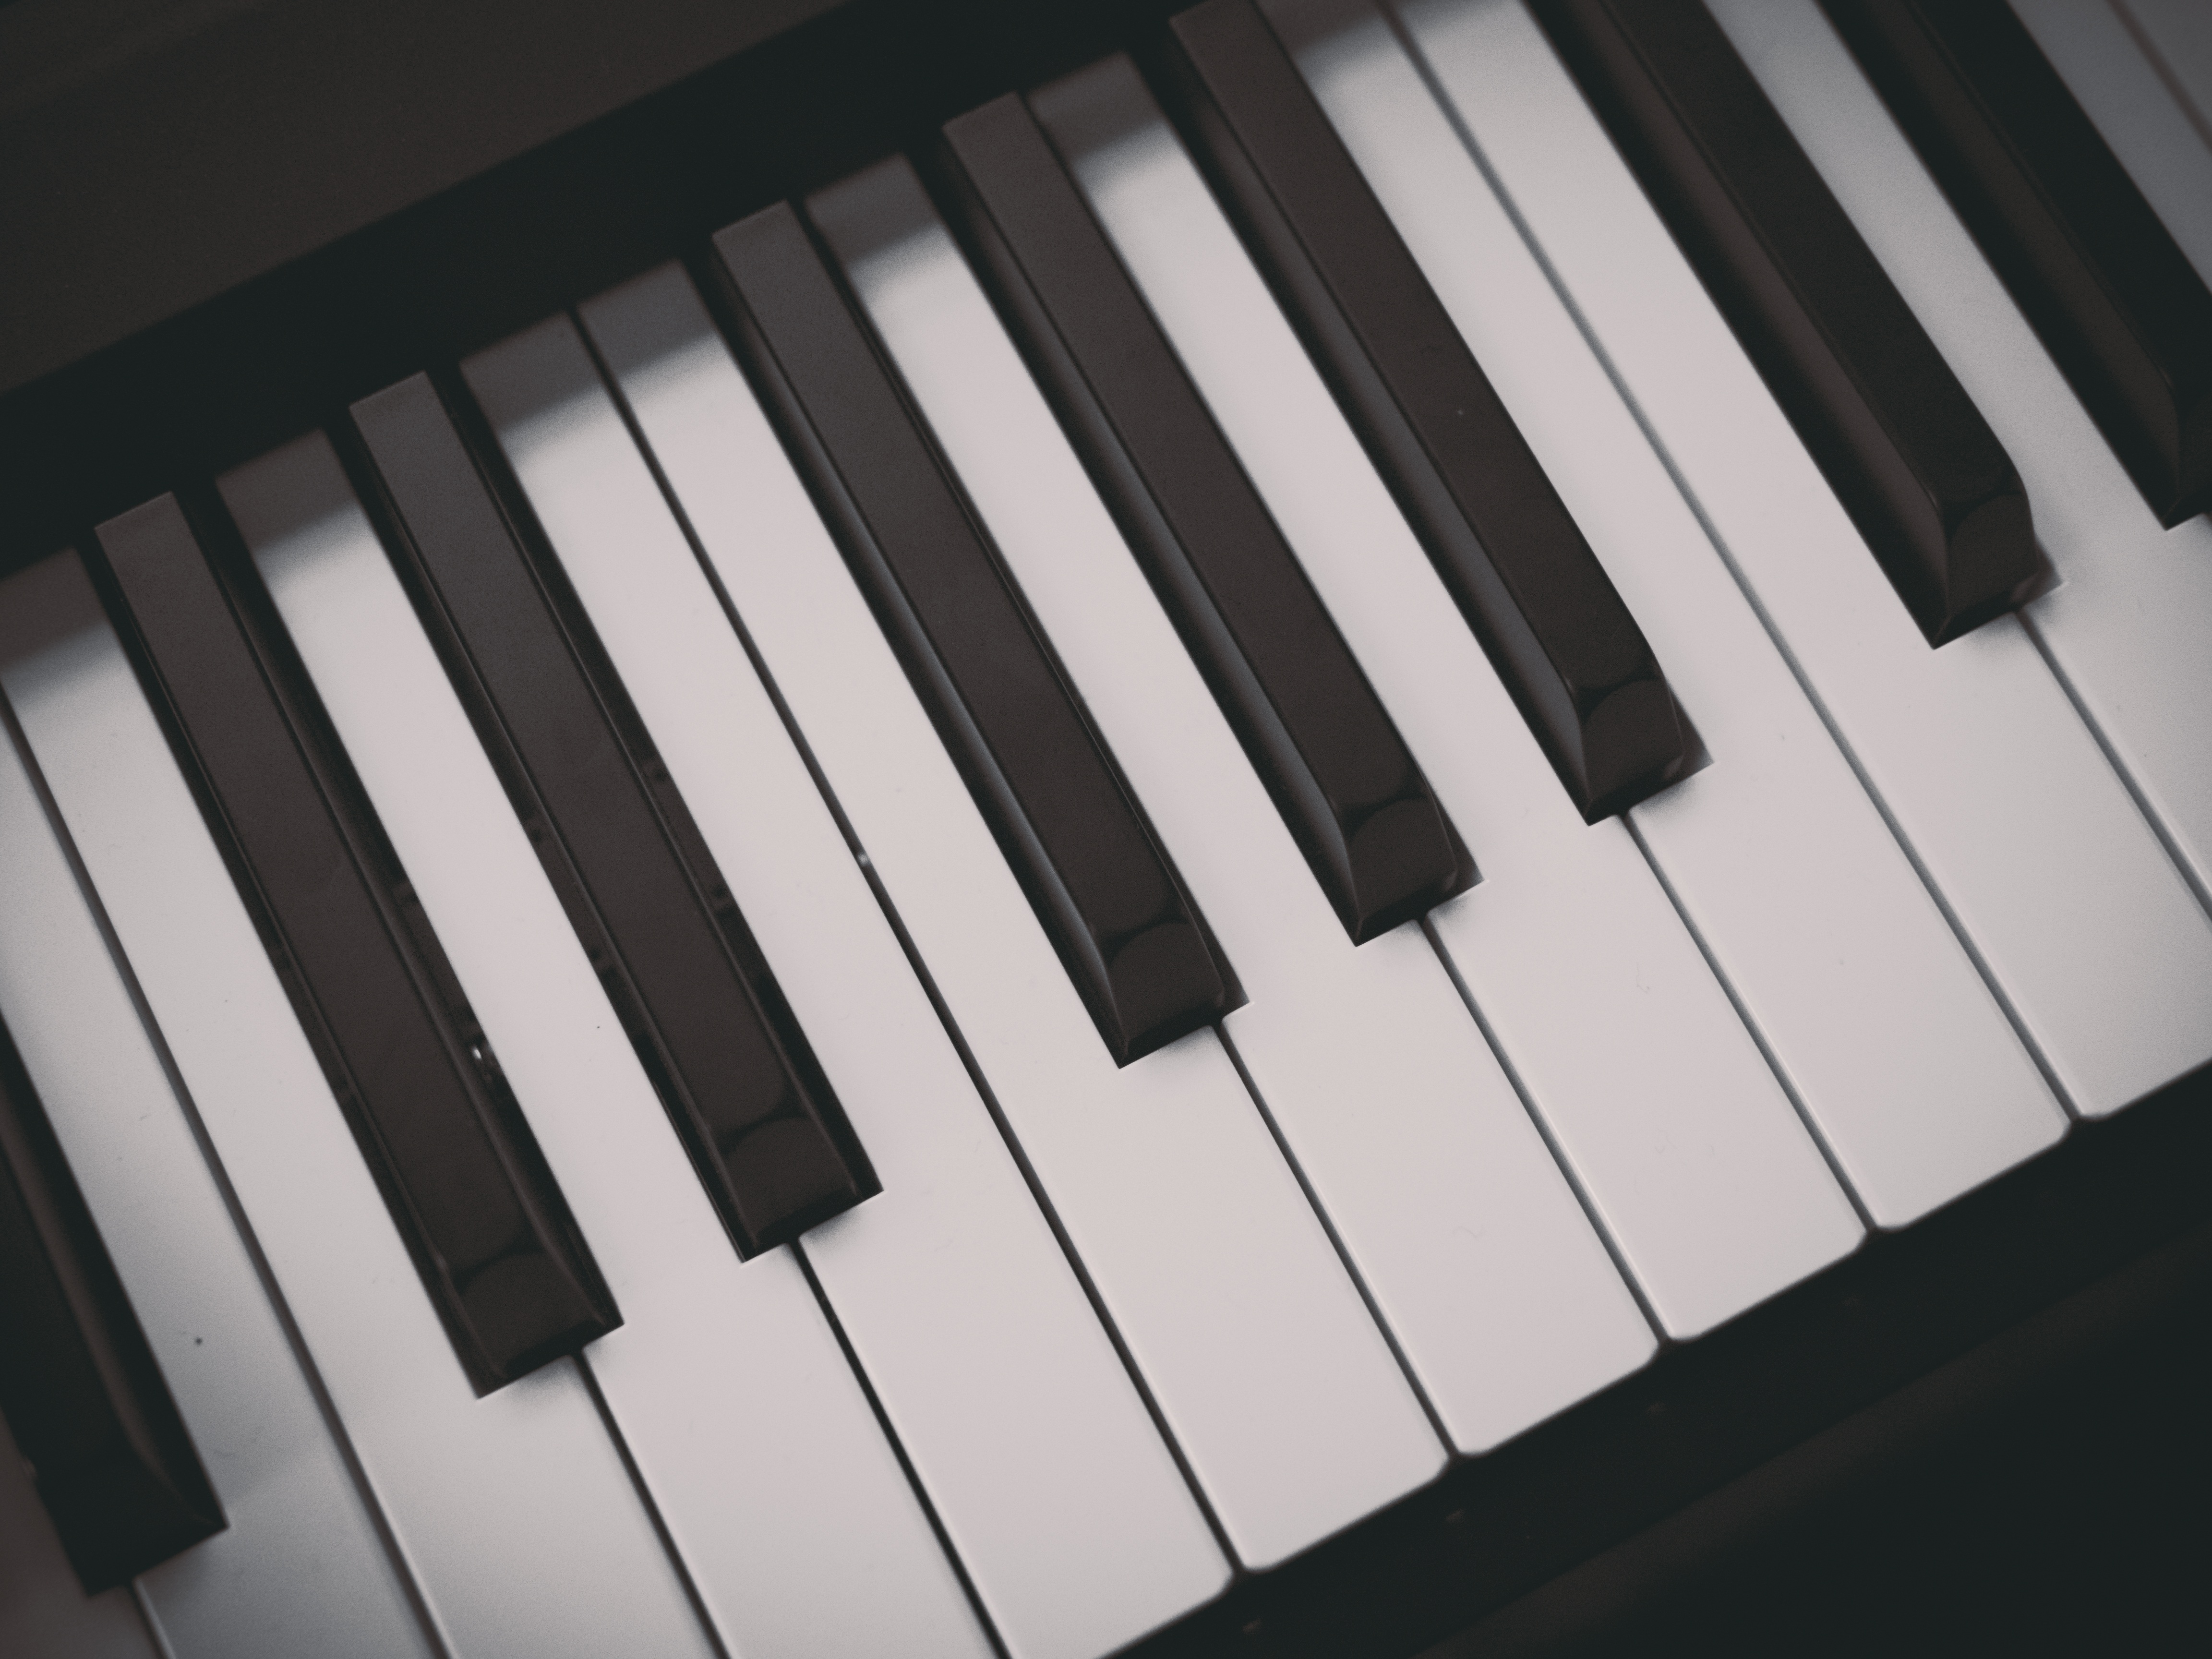 piano, musical instrument, music, keys